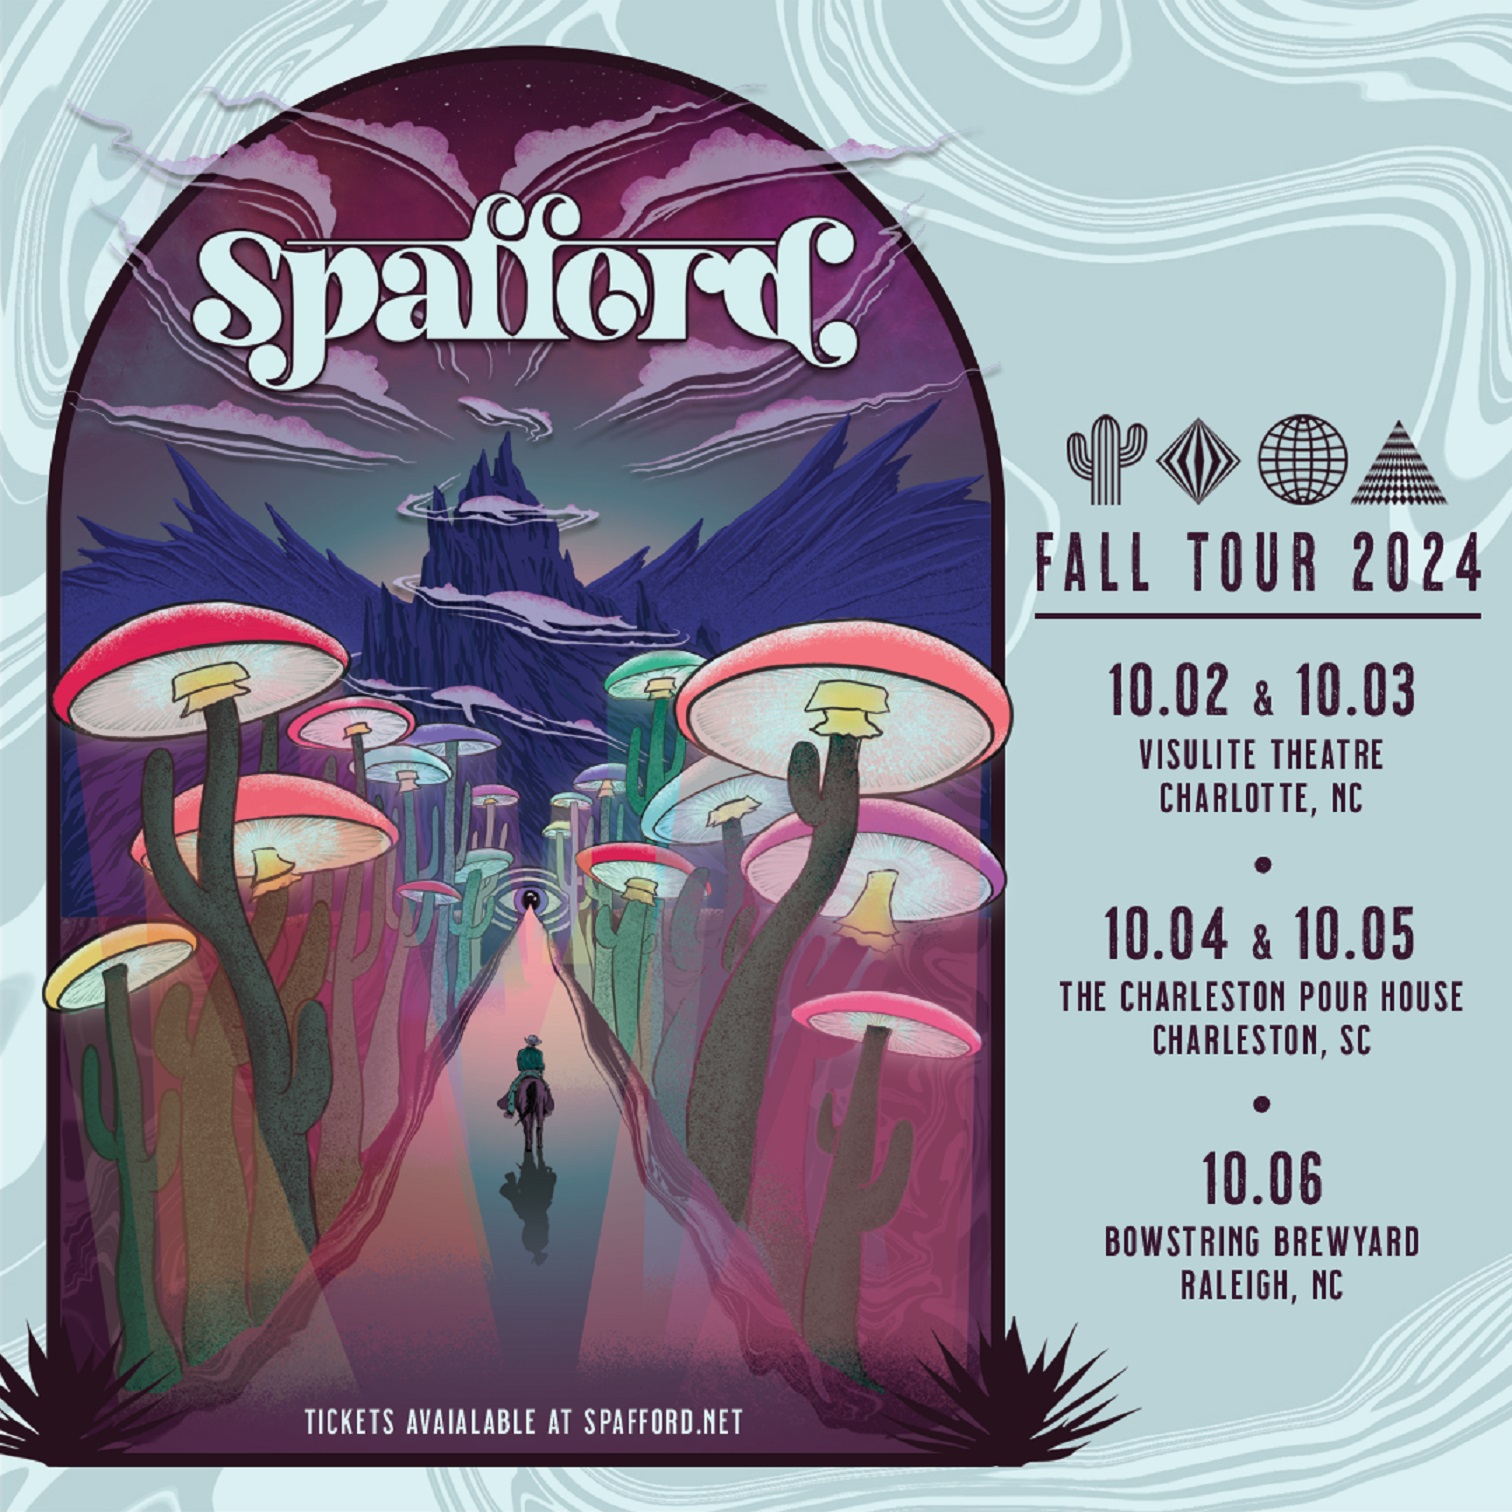 Spafford Announces Carolina Run in October To Kick Off Their Fall Tour